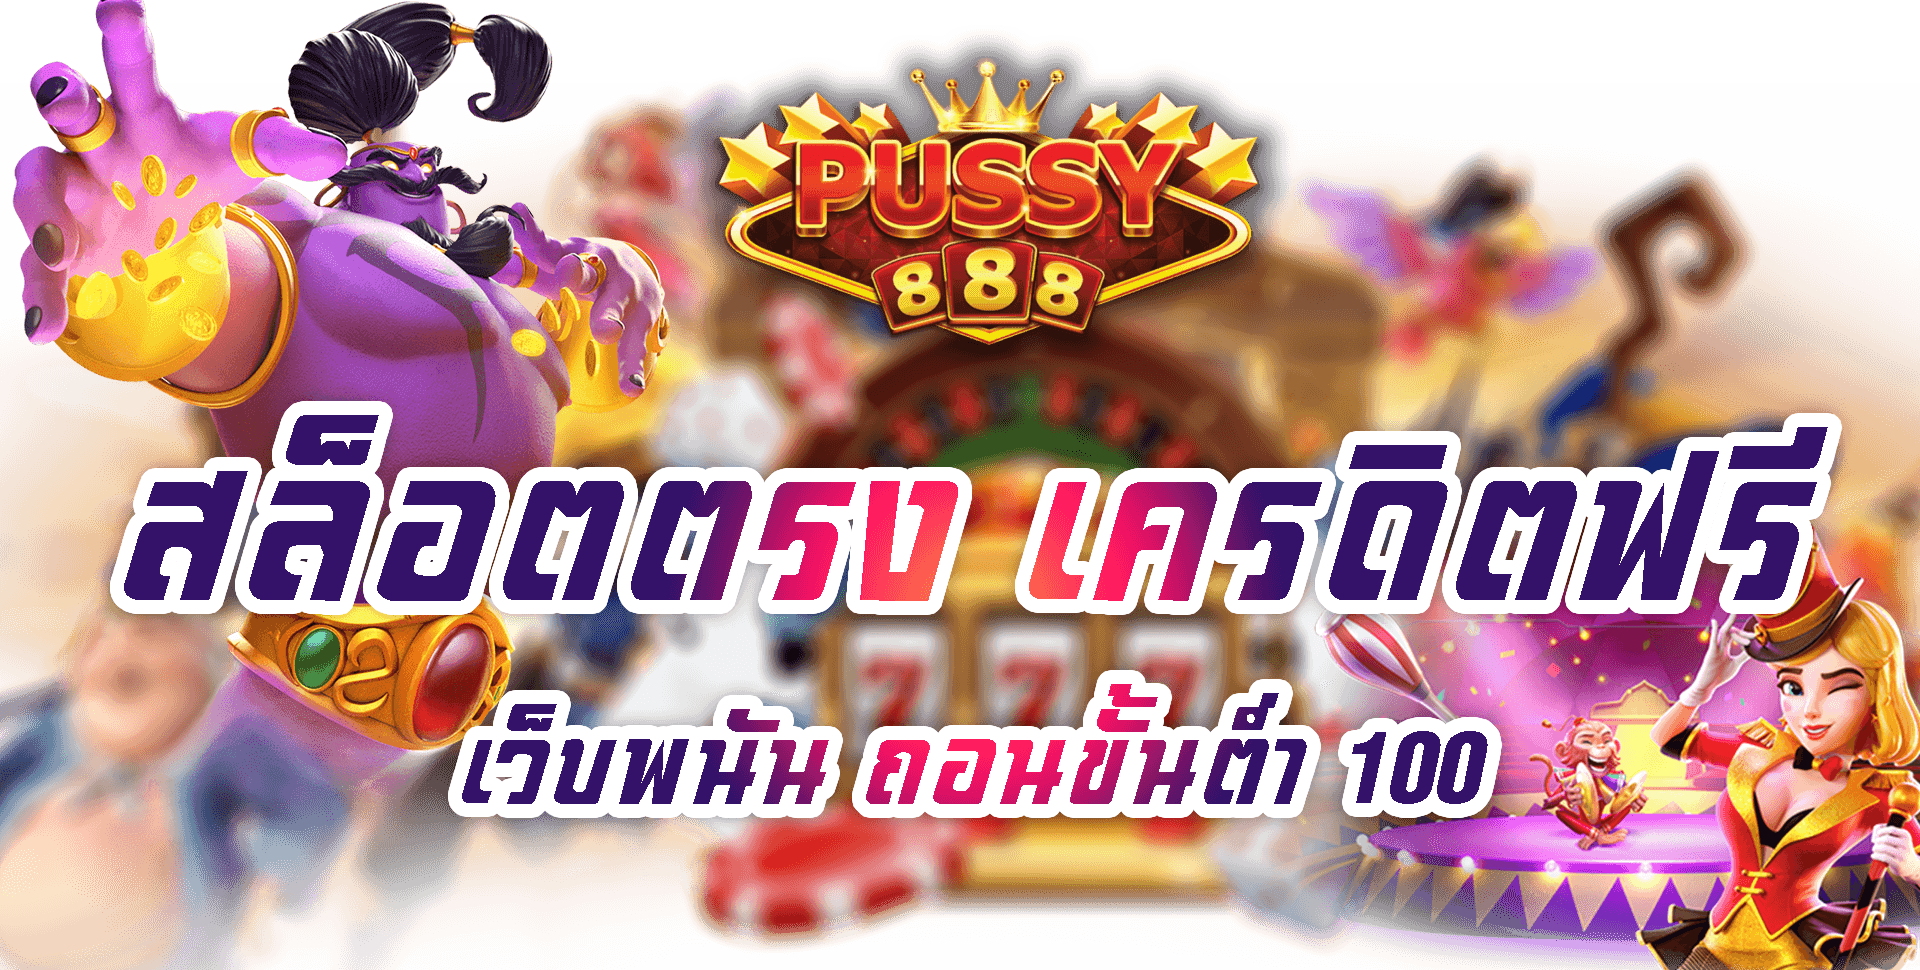 Pussy888-2022-เว็บพนัน ถอนขั้นต่ำ 100